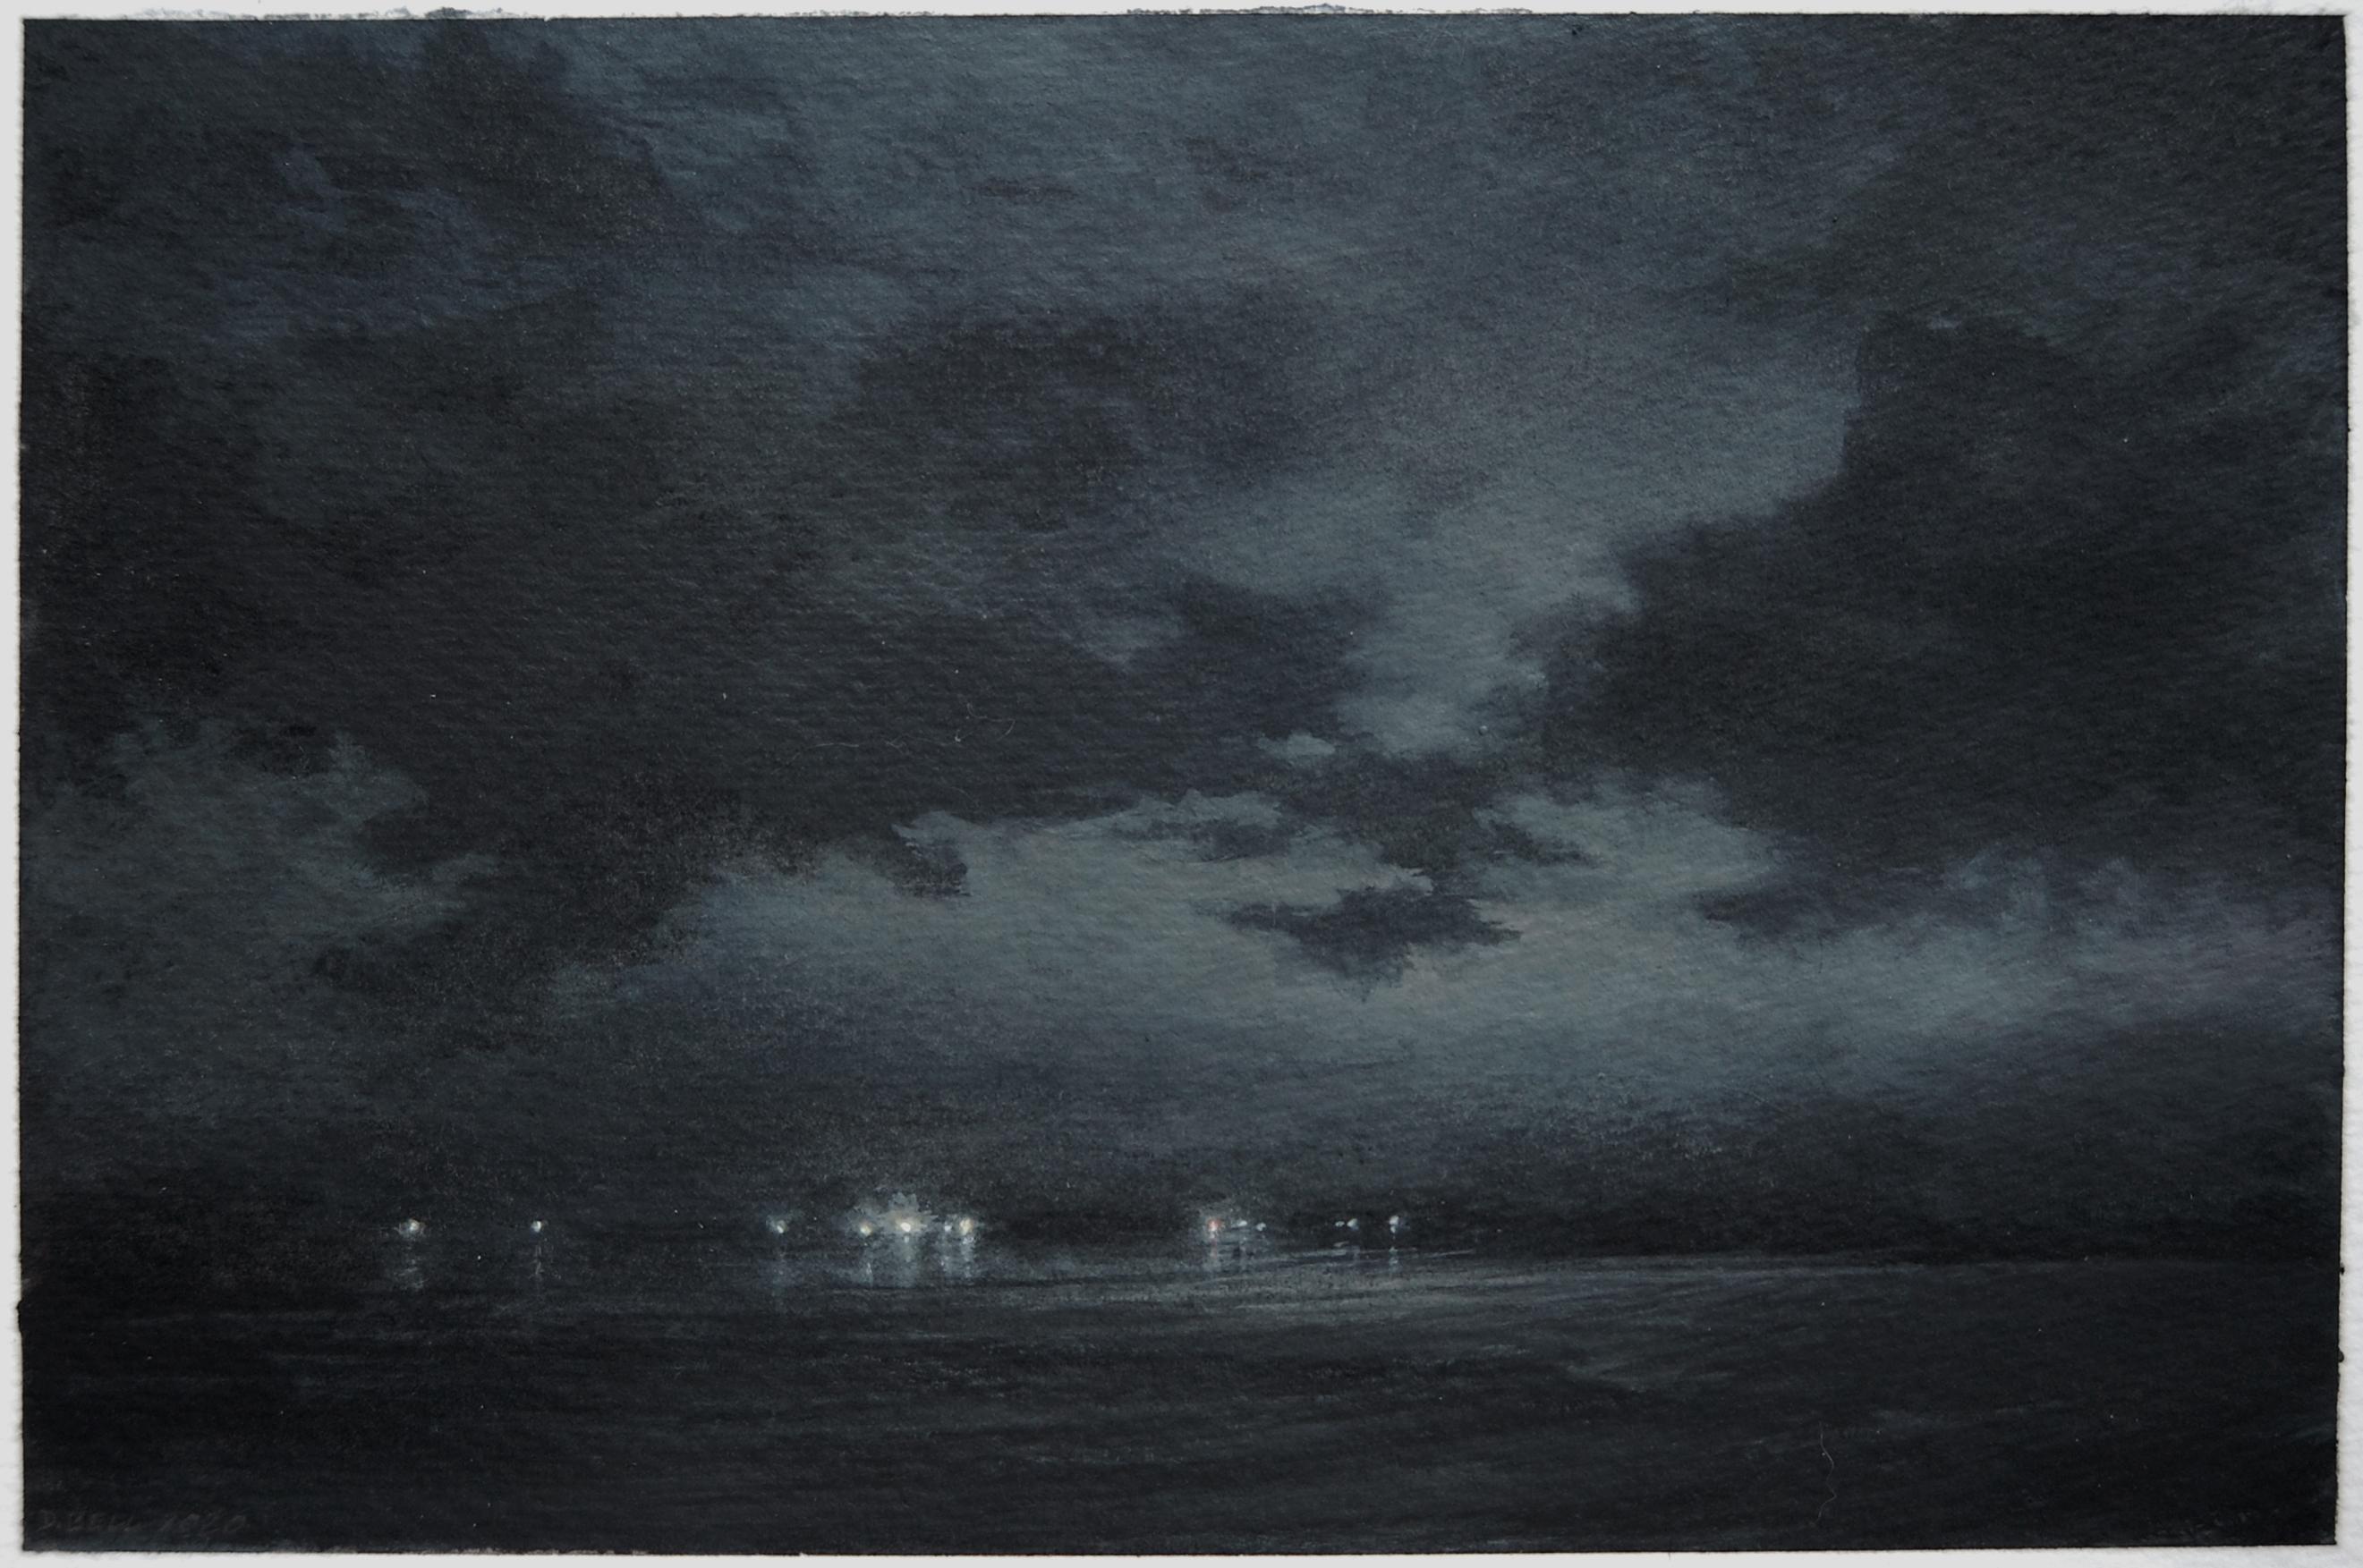 Dozier Bell Landscape Art - Night departure, northeastern seascape watercolor